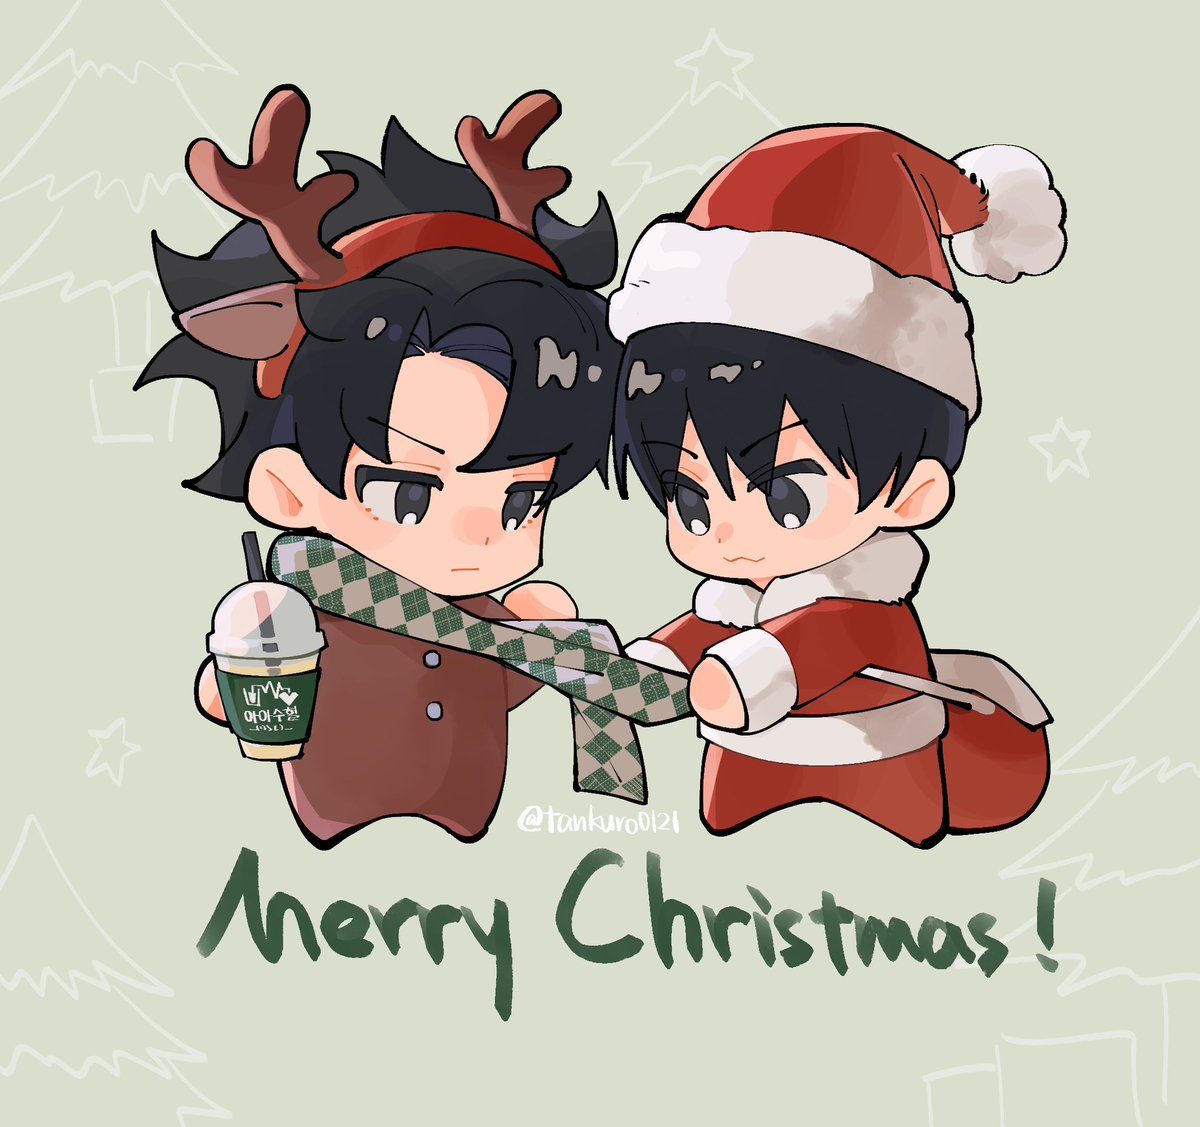 「Merry Christmas!! #ORV #Joongdok #중독」|炭黒のイラスト